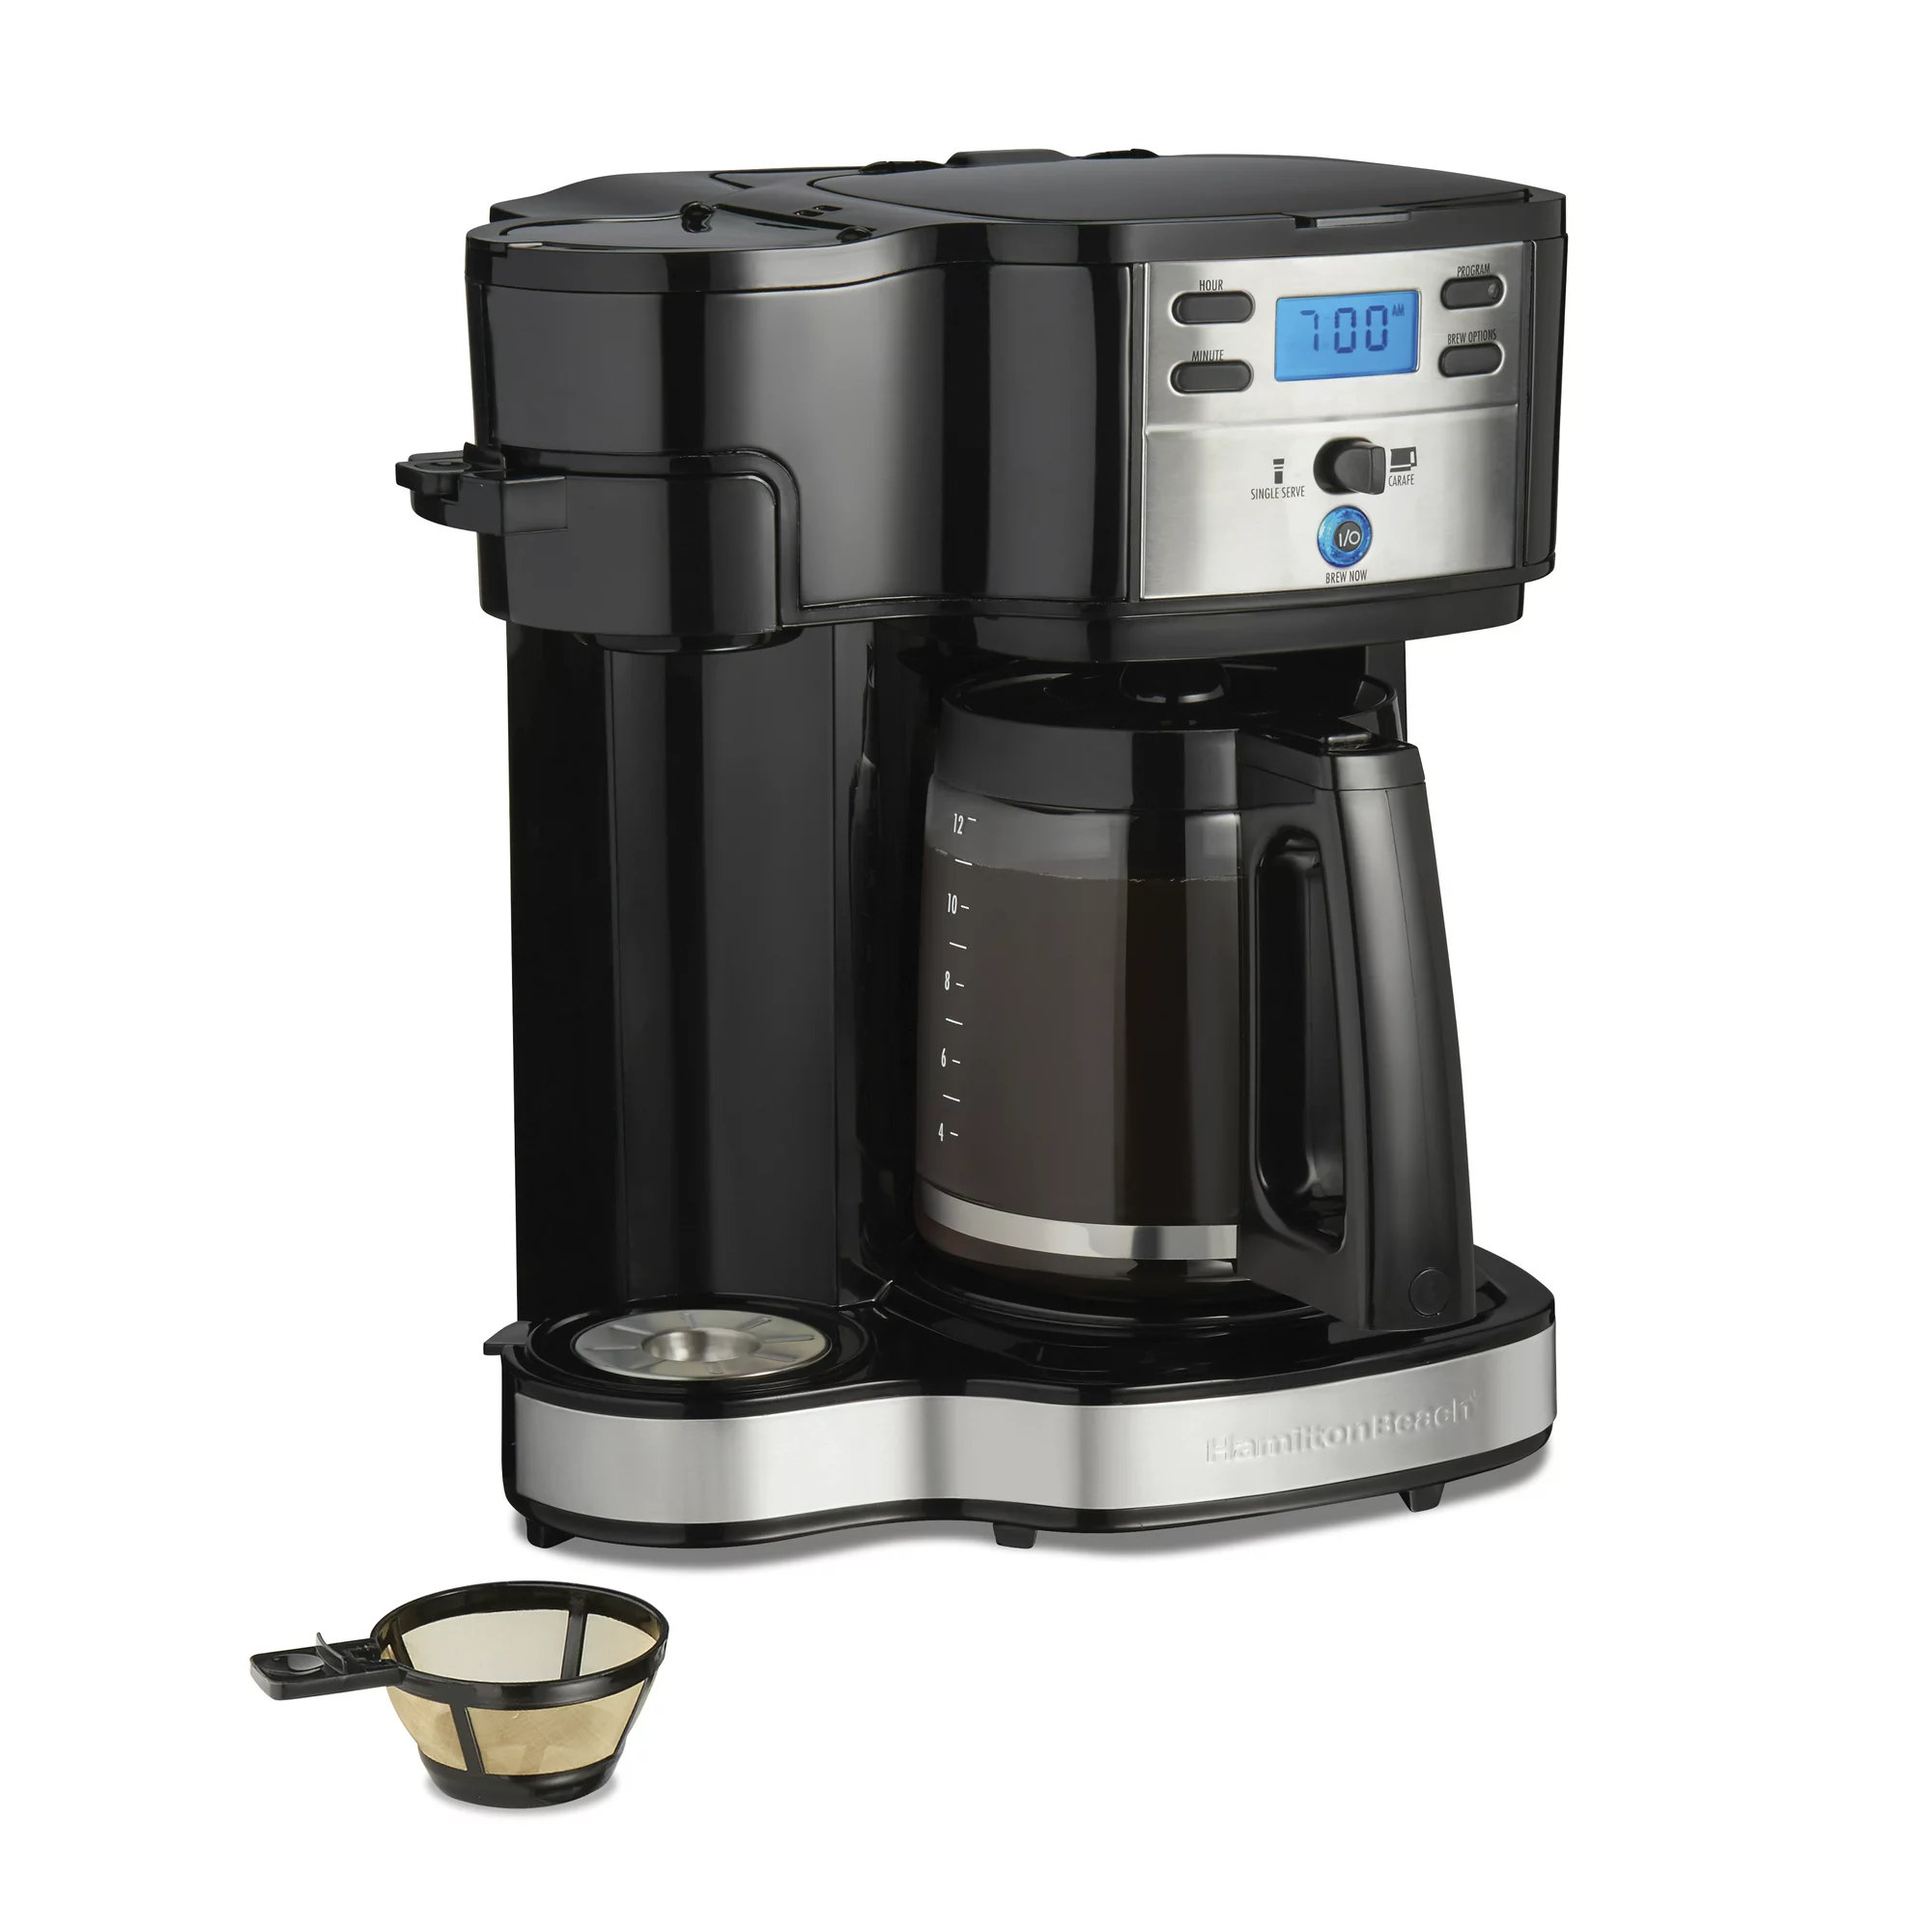 Hamilton Beach FlexBrew 2 Way Coffee Maker with 12-Cup Capacity - Black